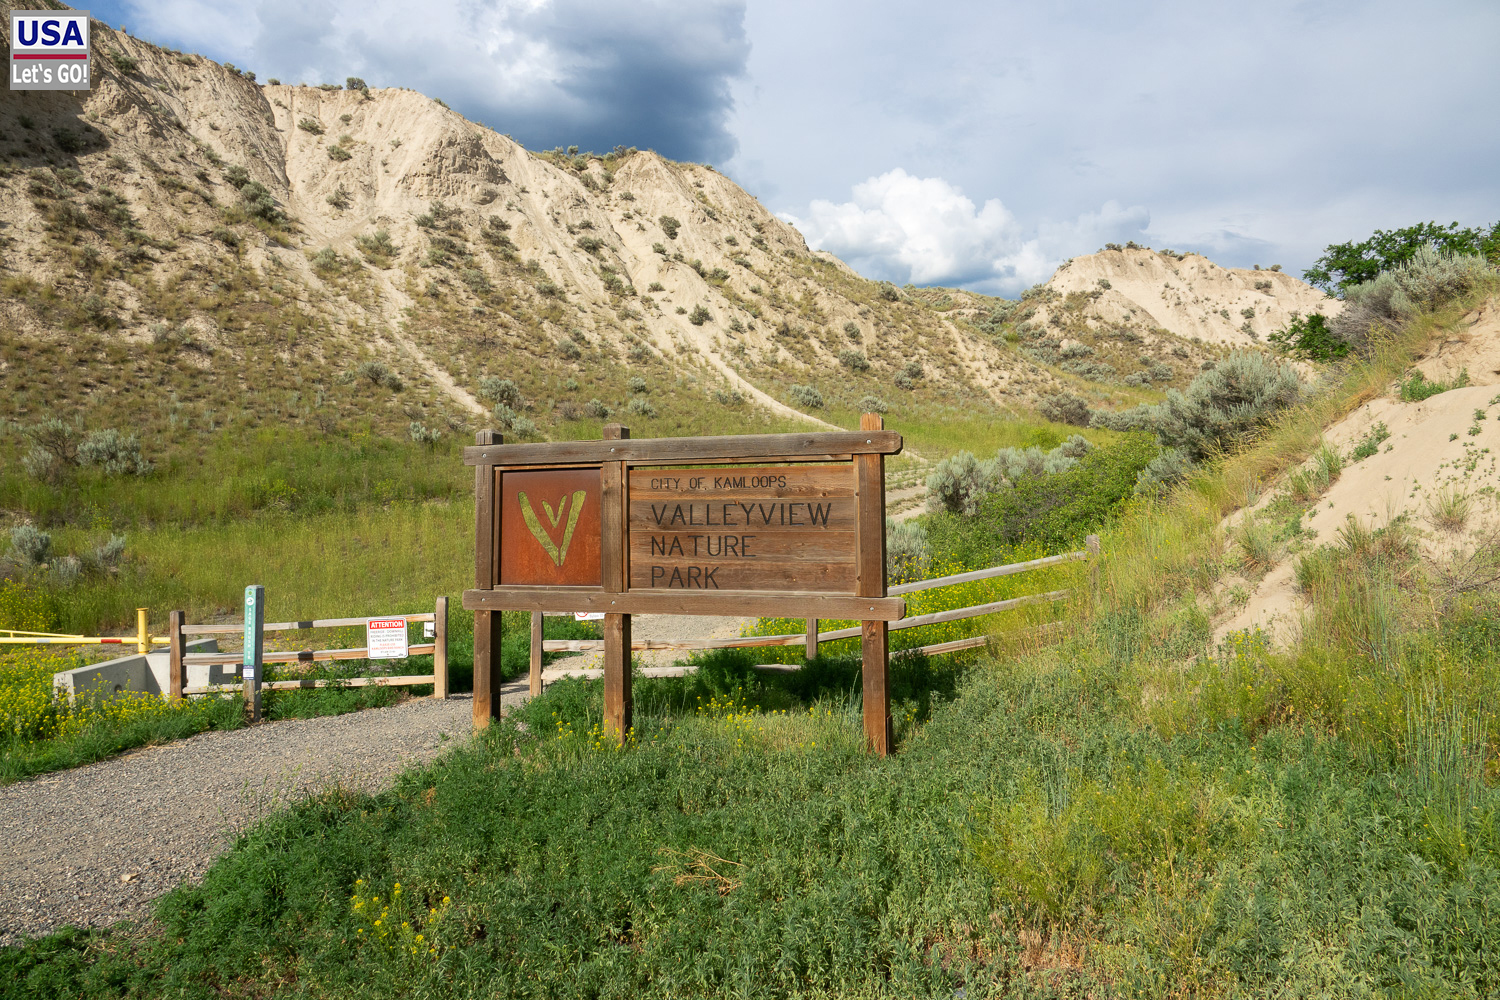 Valleyview Nature Park